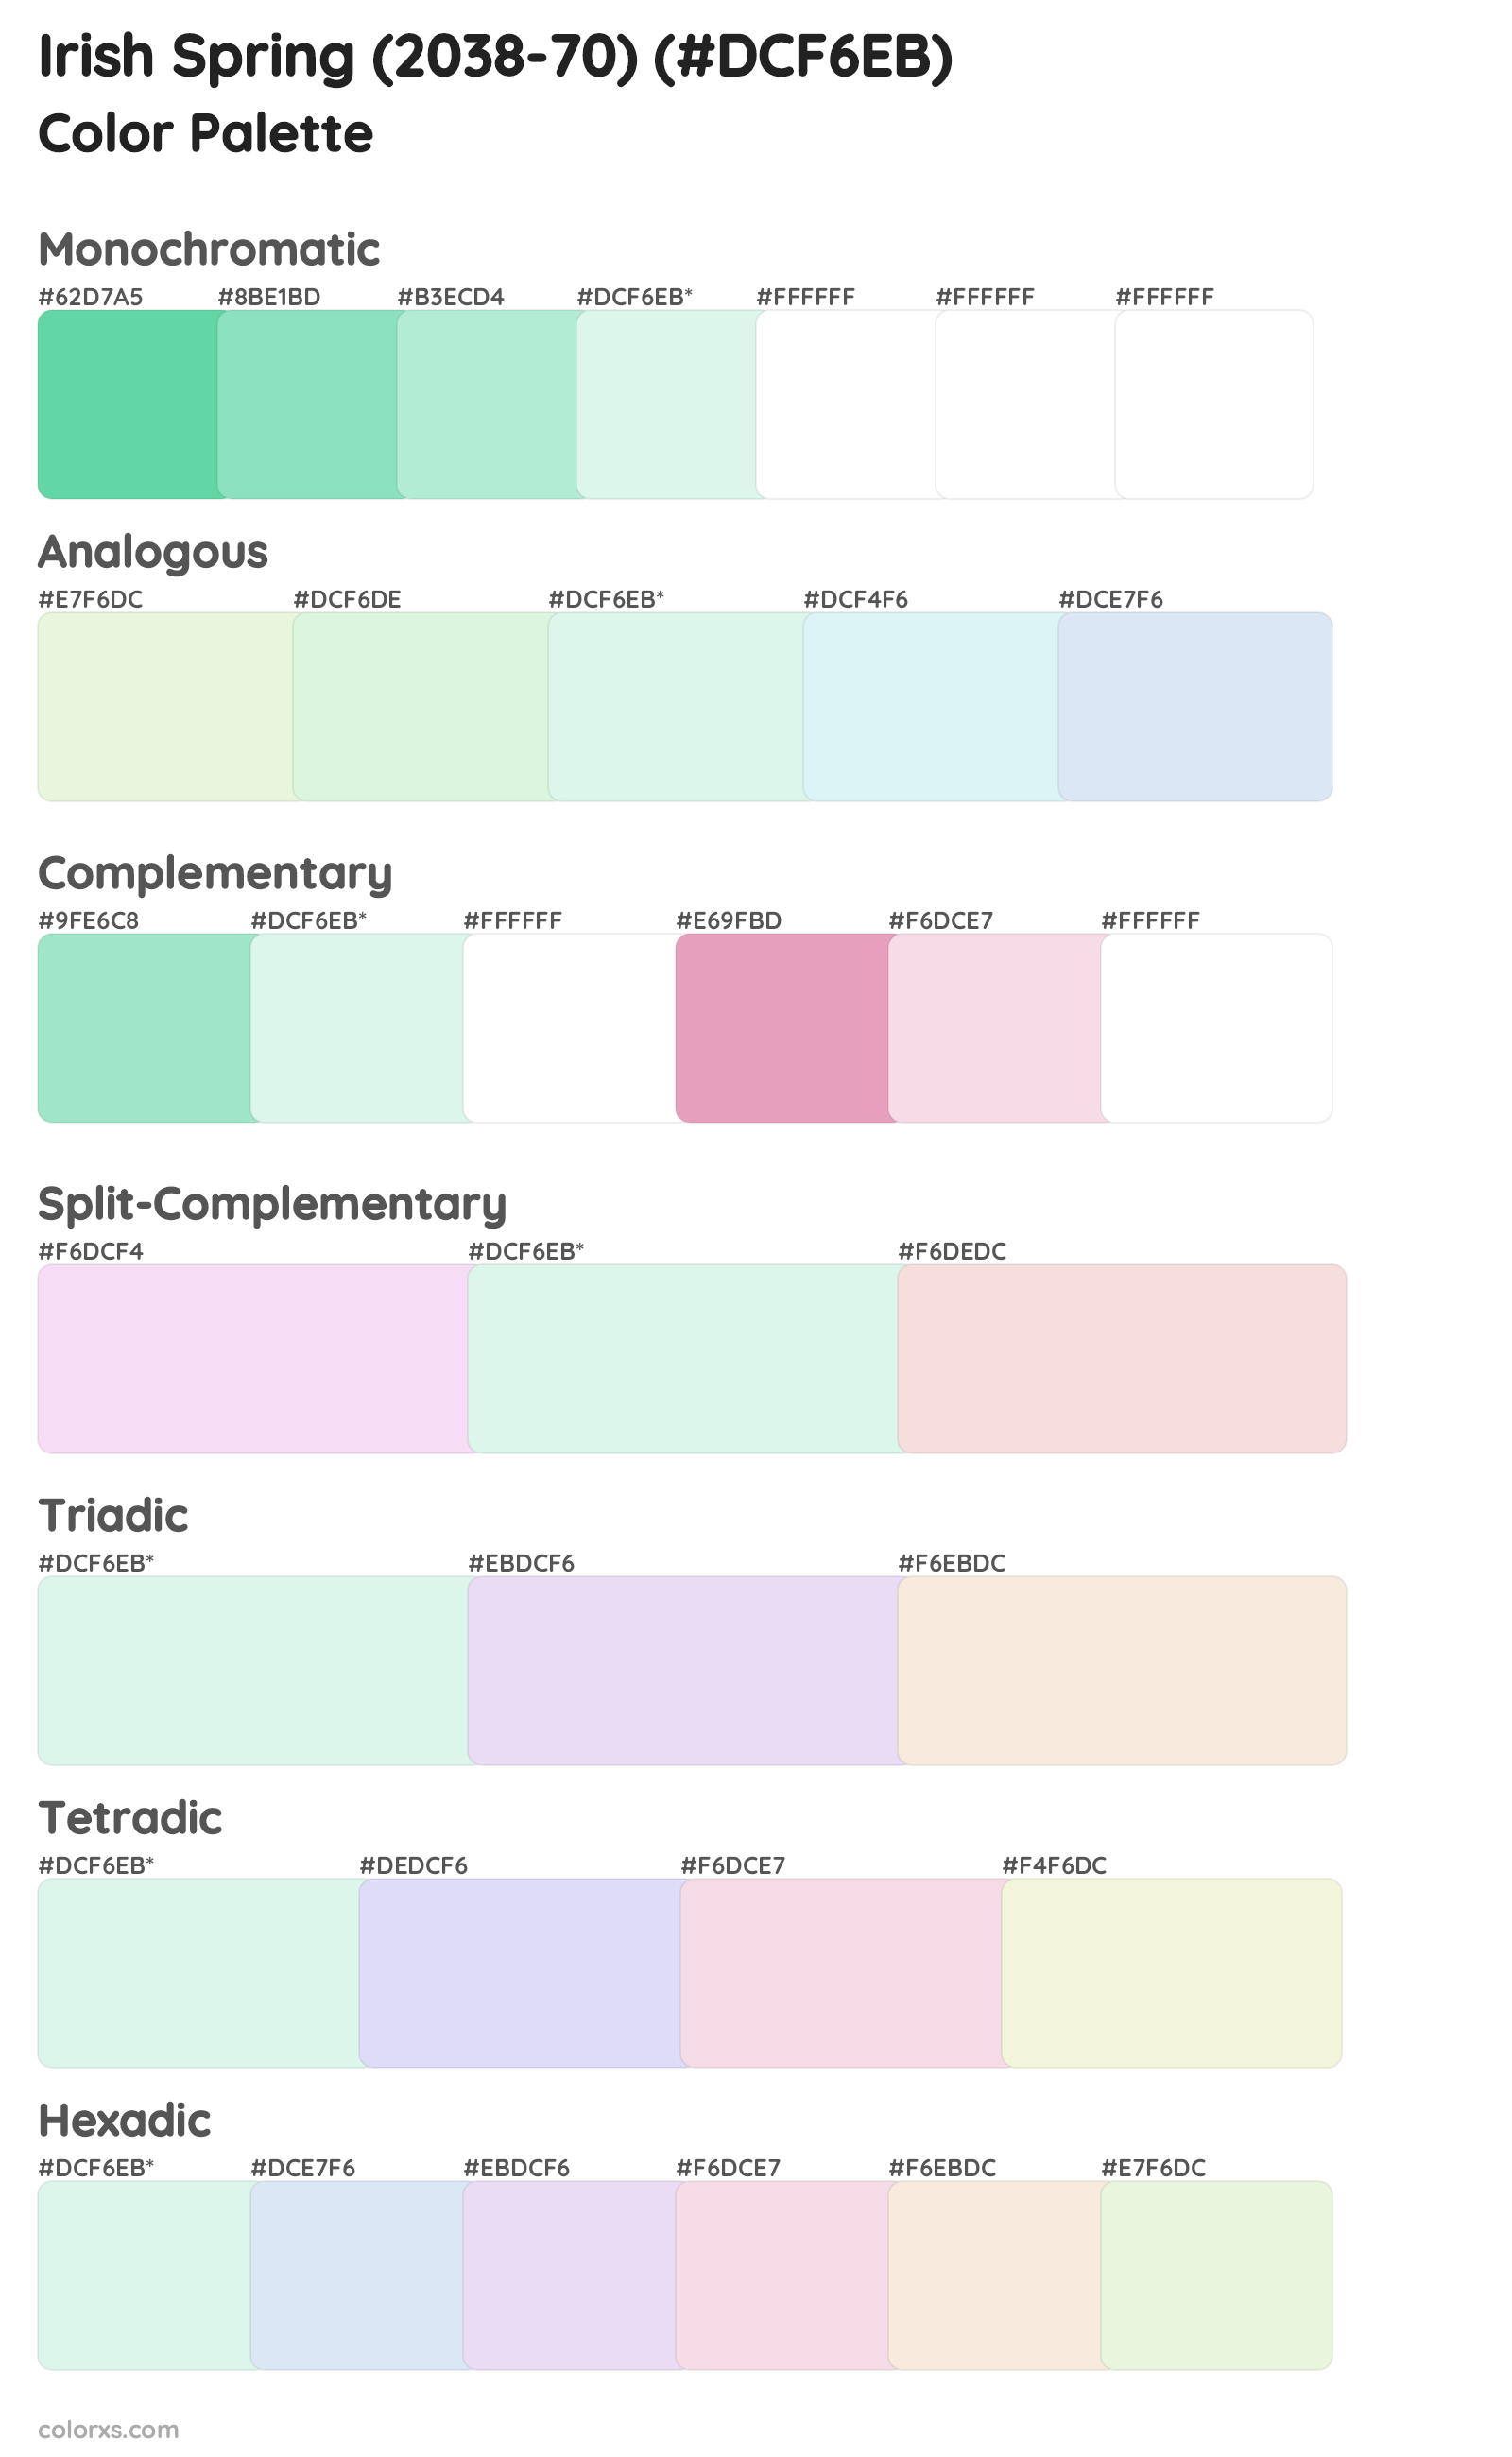 Irish Spring (2038-70) Color Scheme Palettes